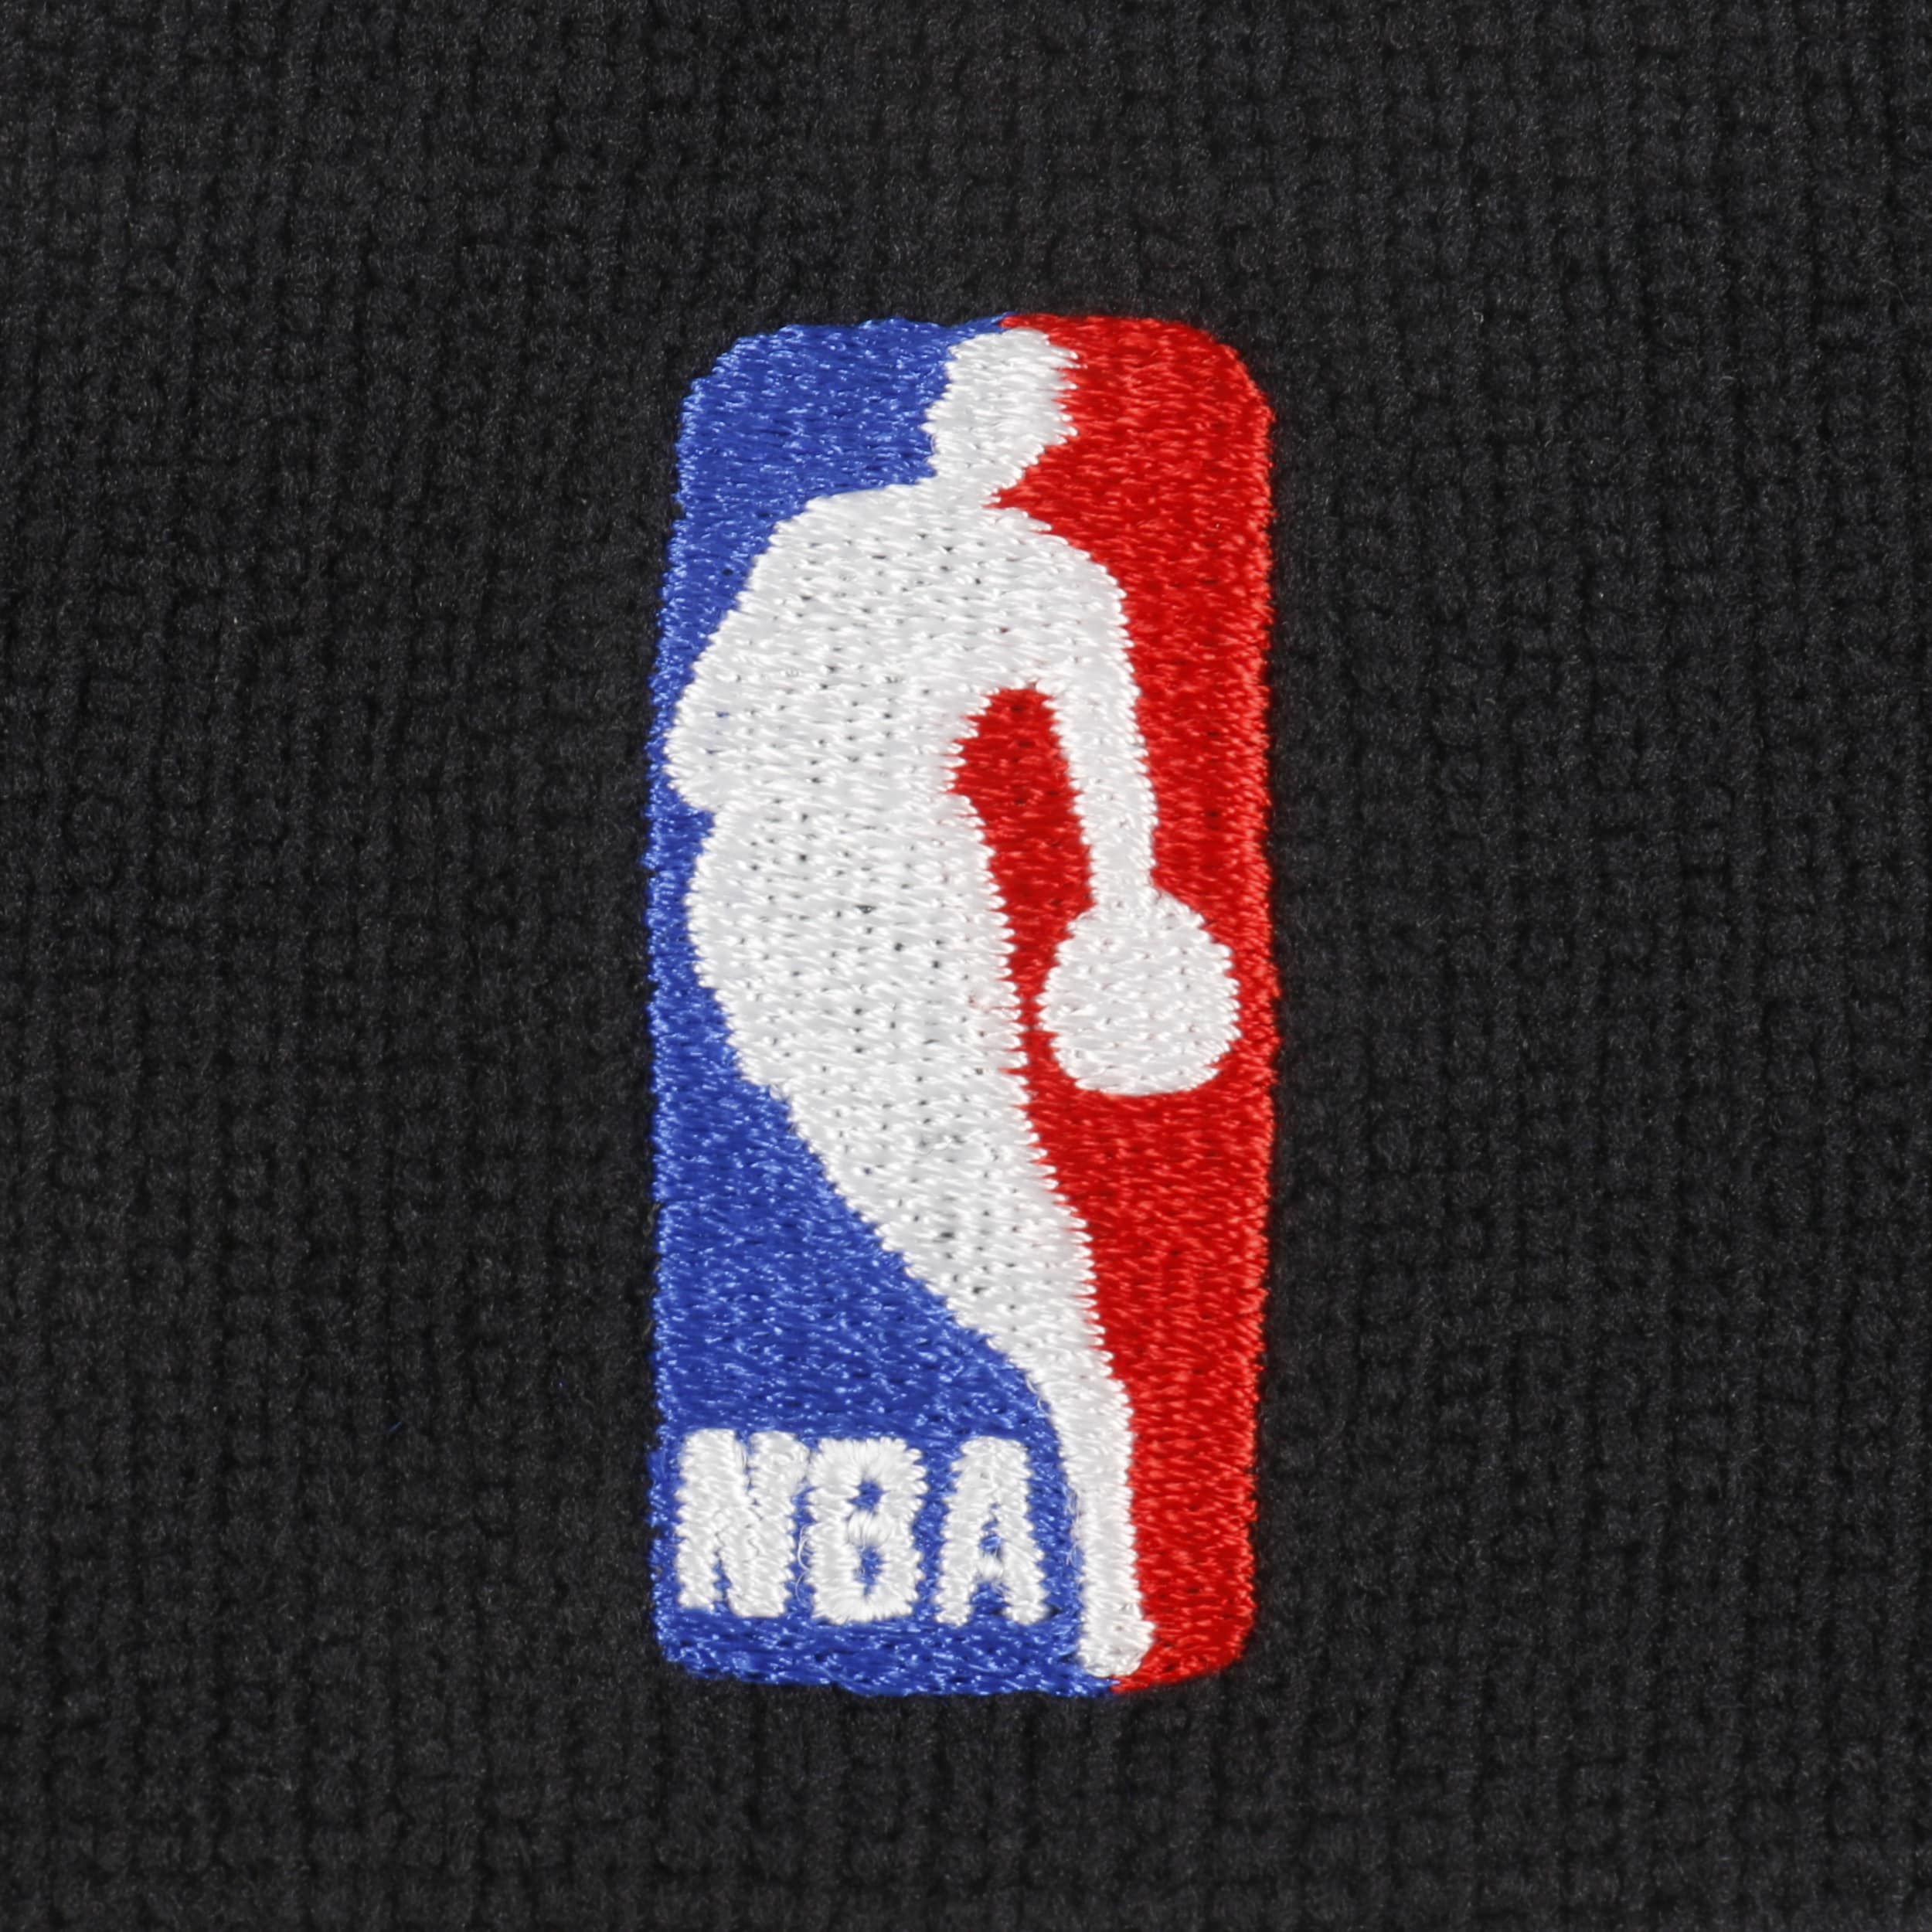 Official Nike NBA Elite Headband Red